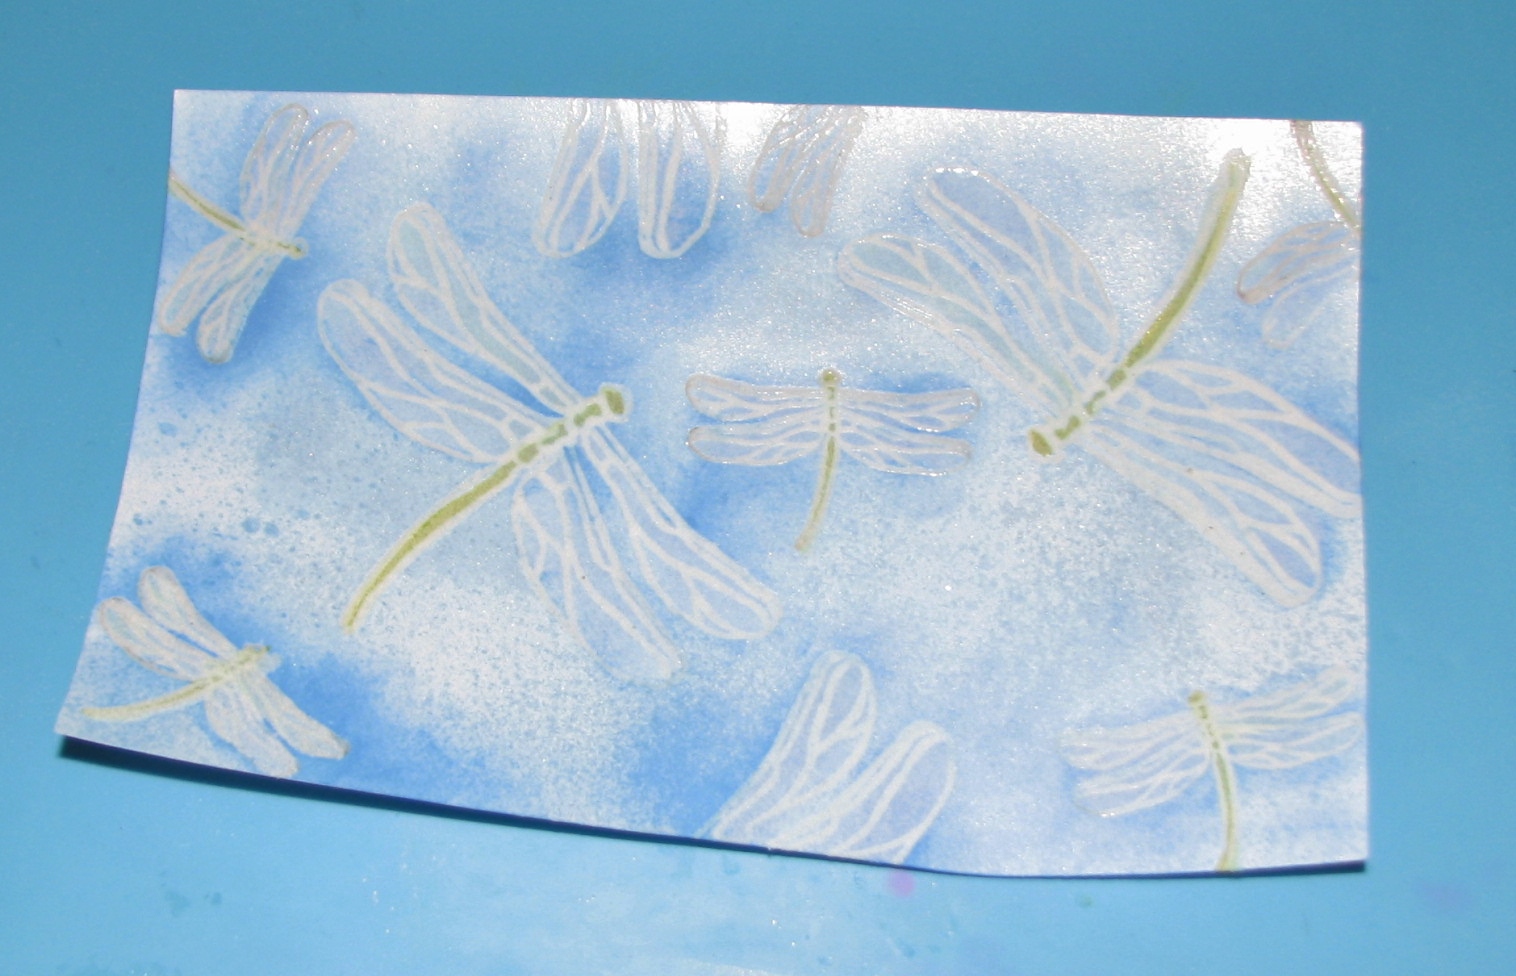 Imagine Crafts Tsukineko Memento Full Size Ink Pad - Bahama Blue -  Scrapbooking Made Simple